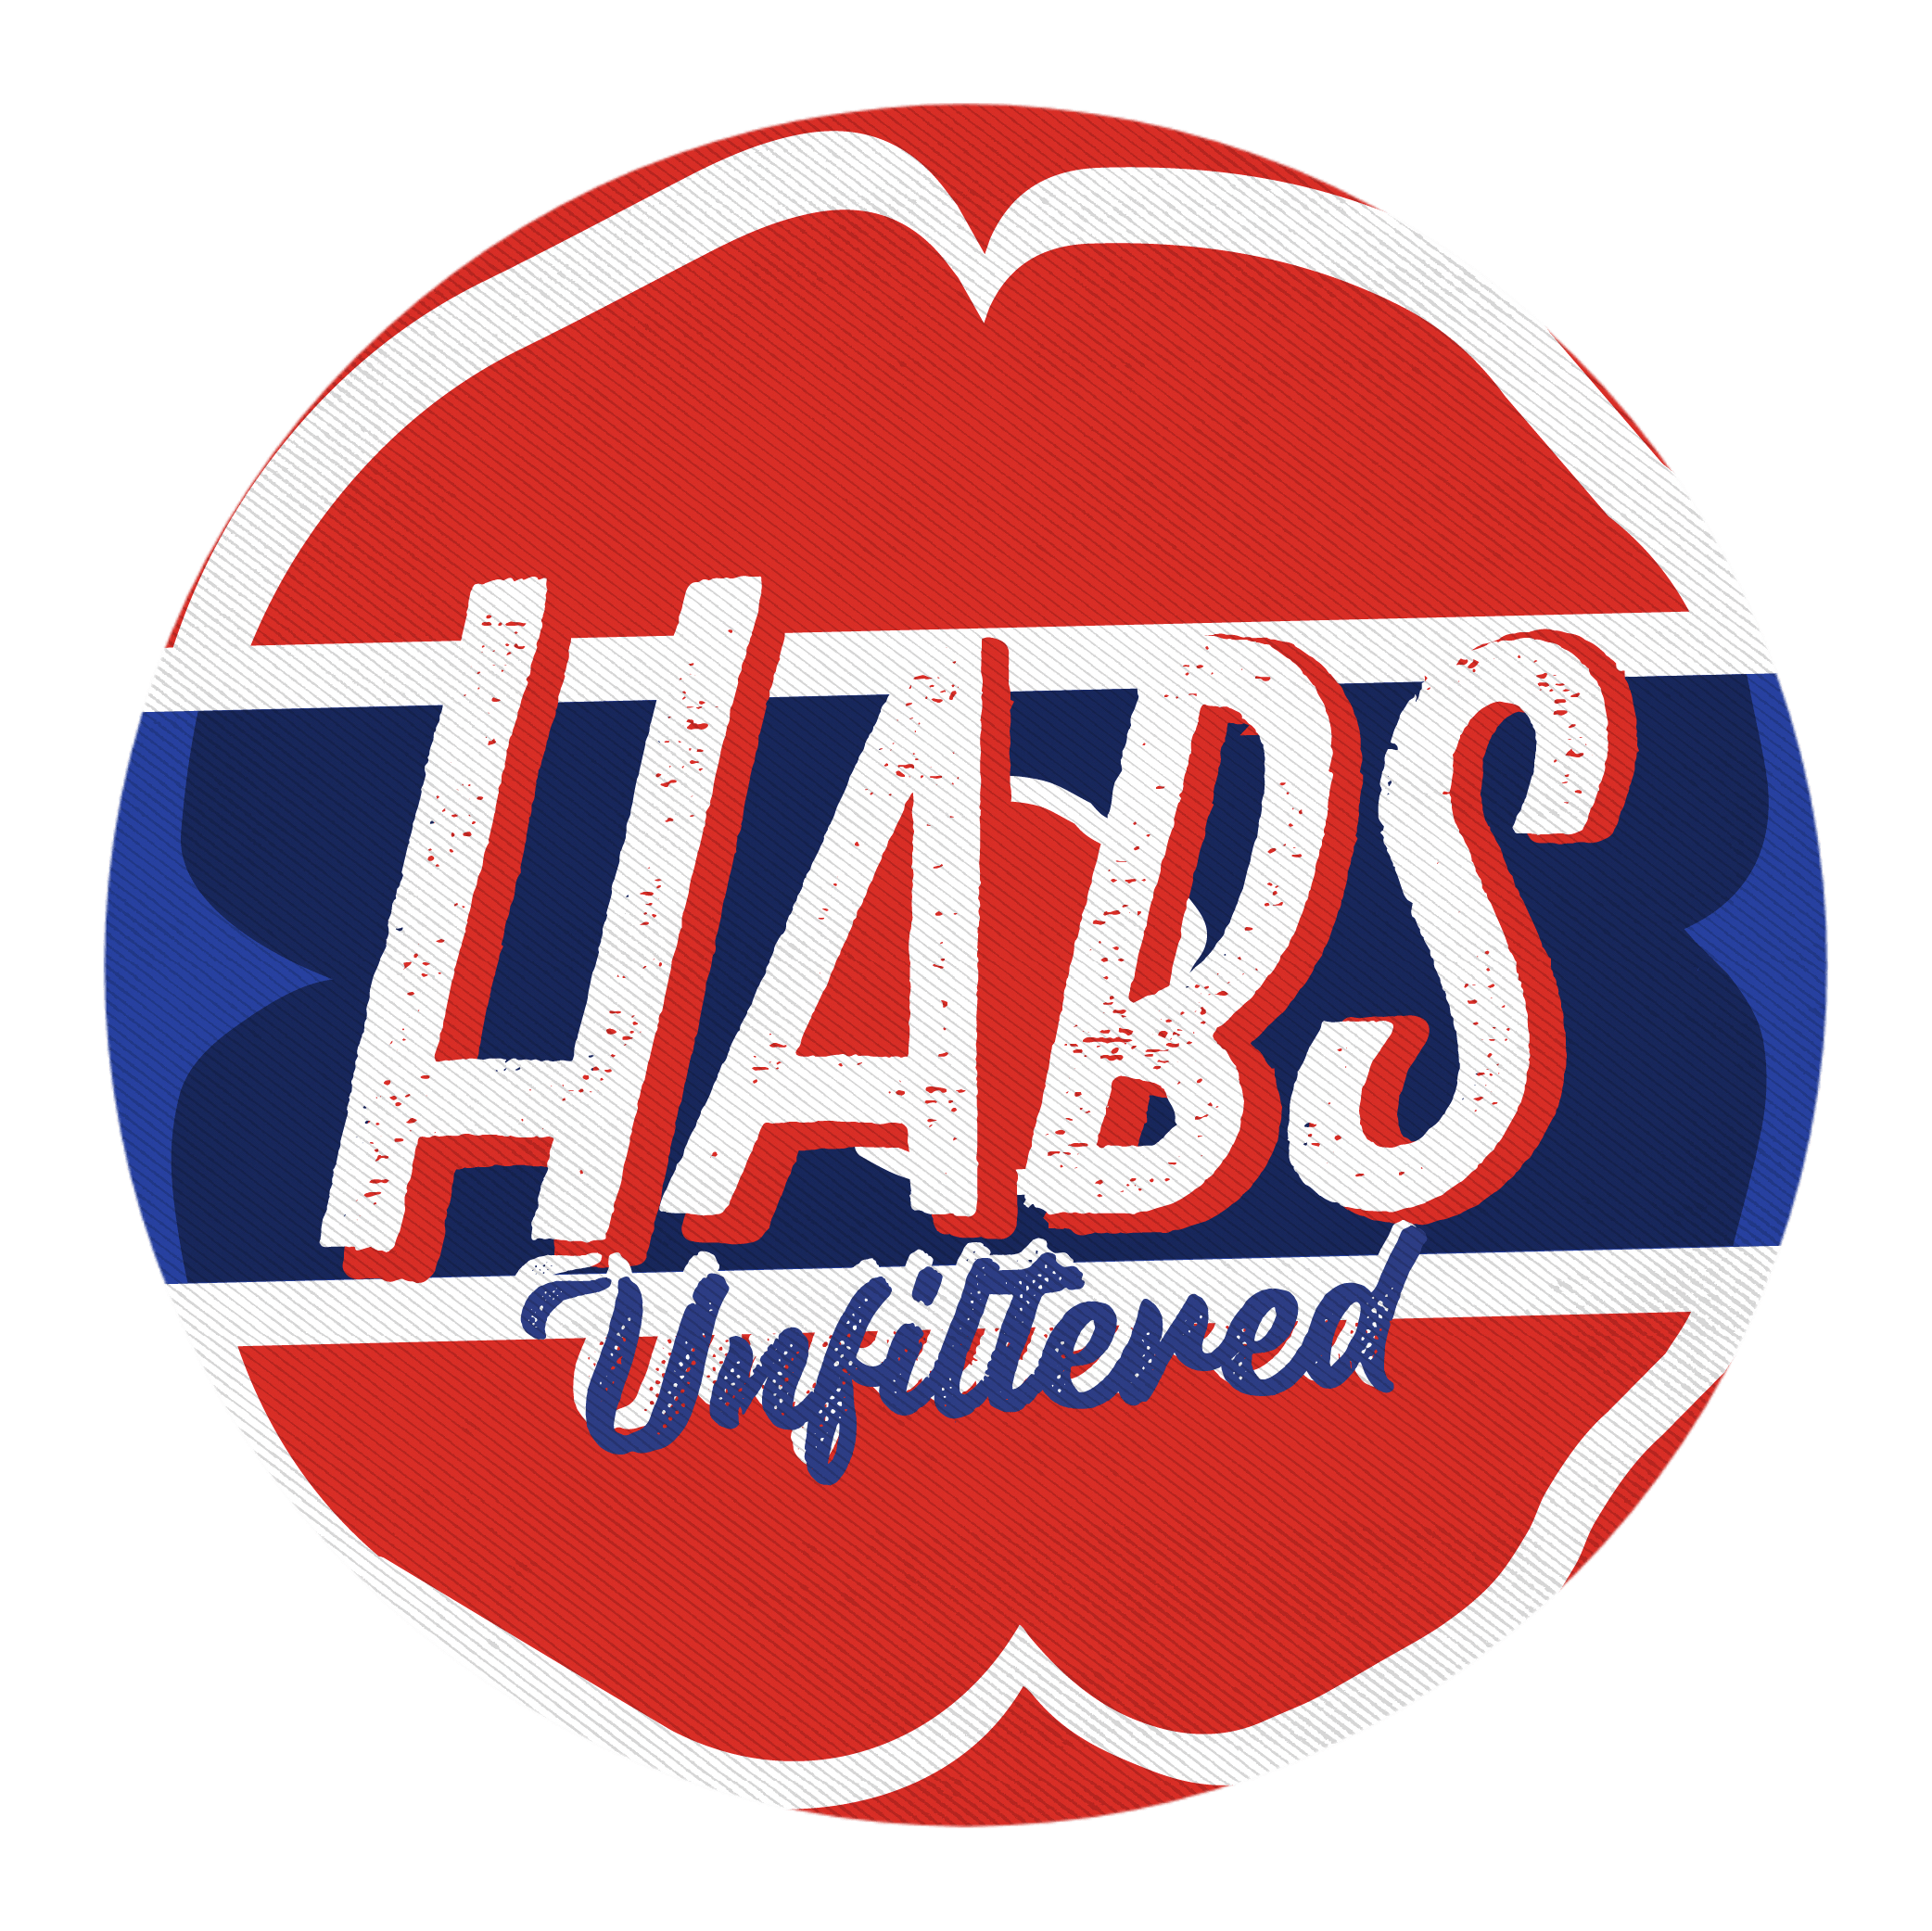 Habs Unfiltered - Live from Nashville